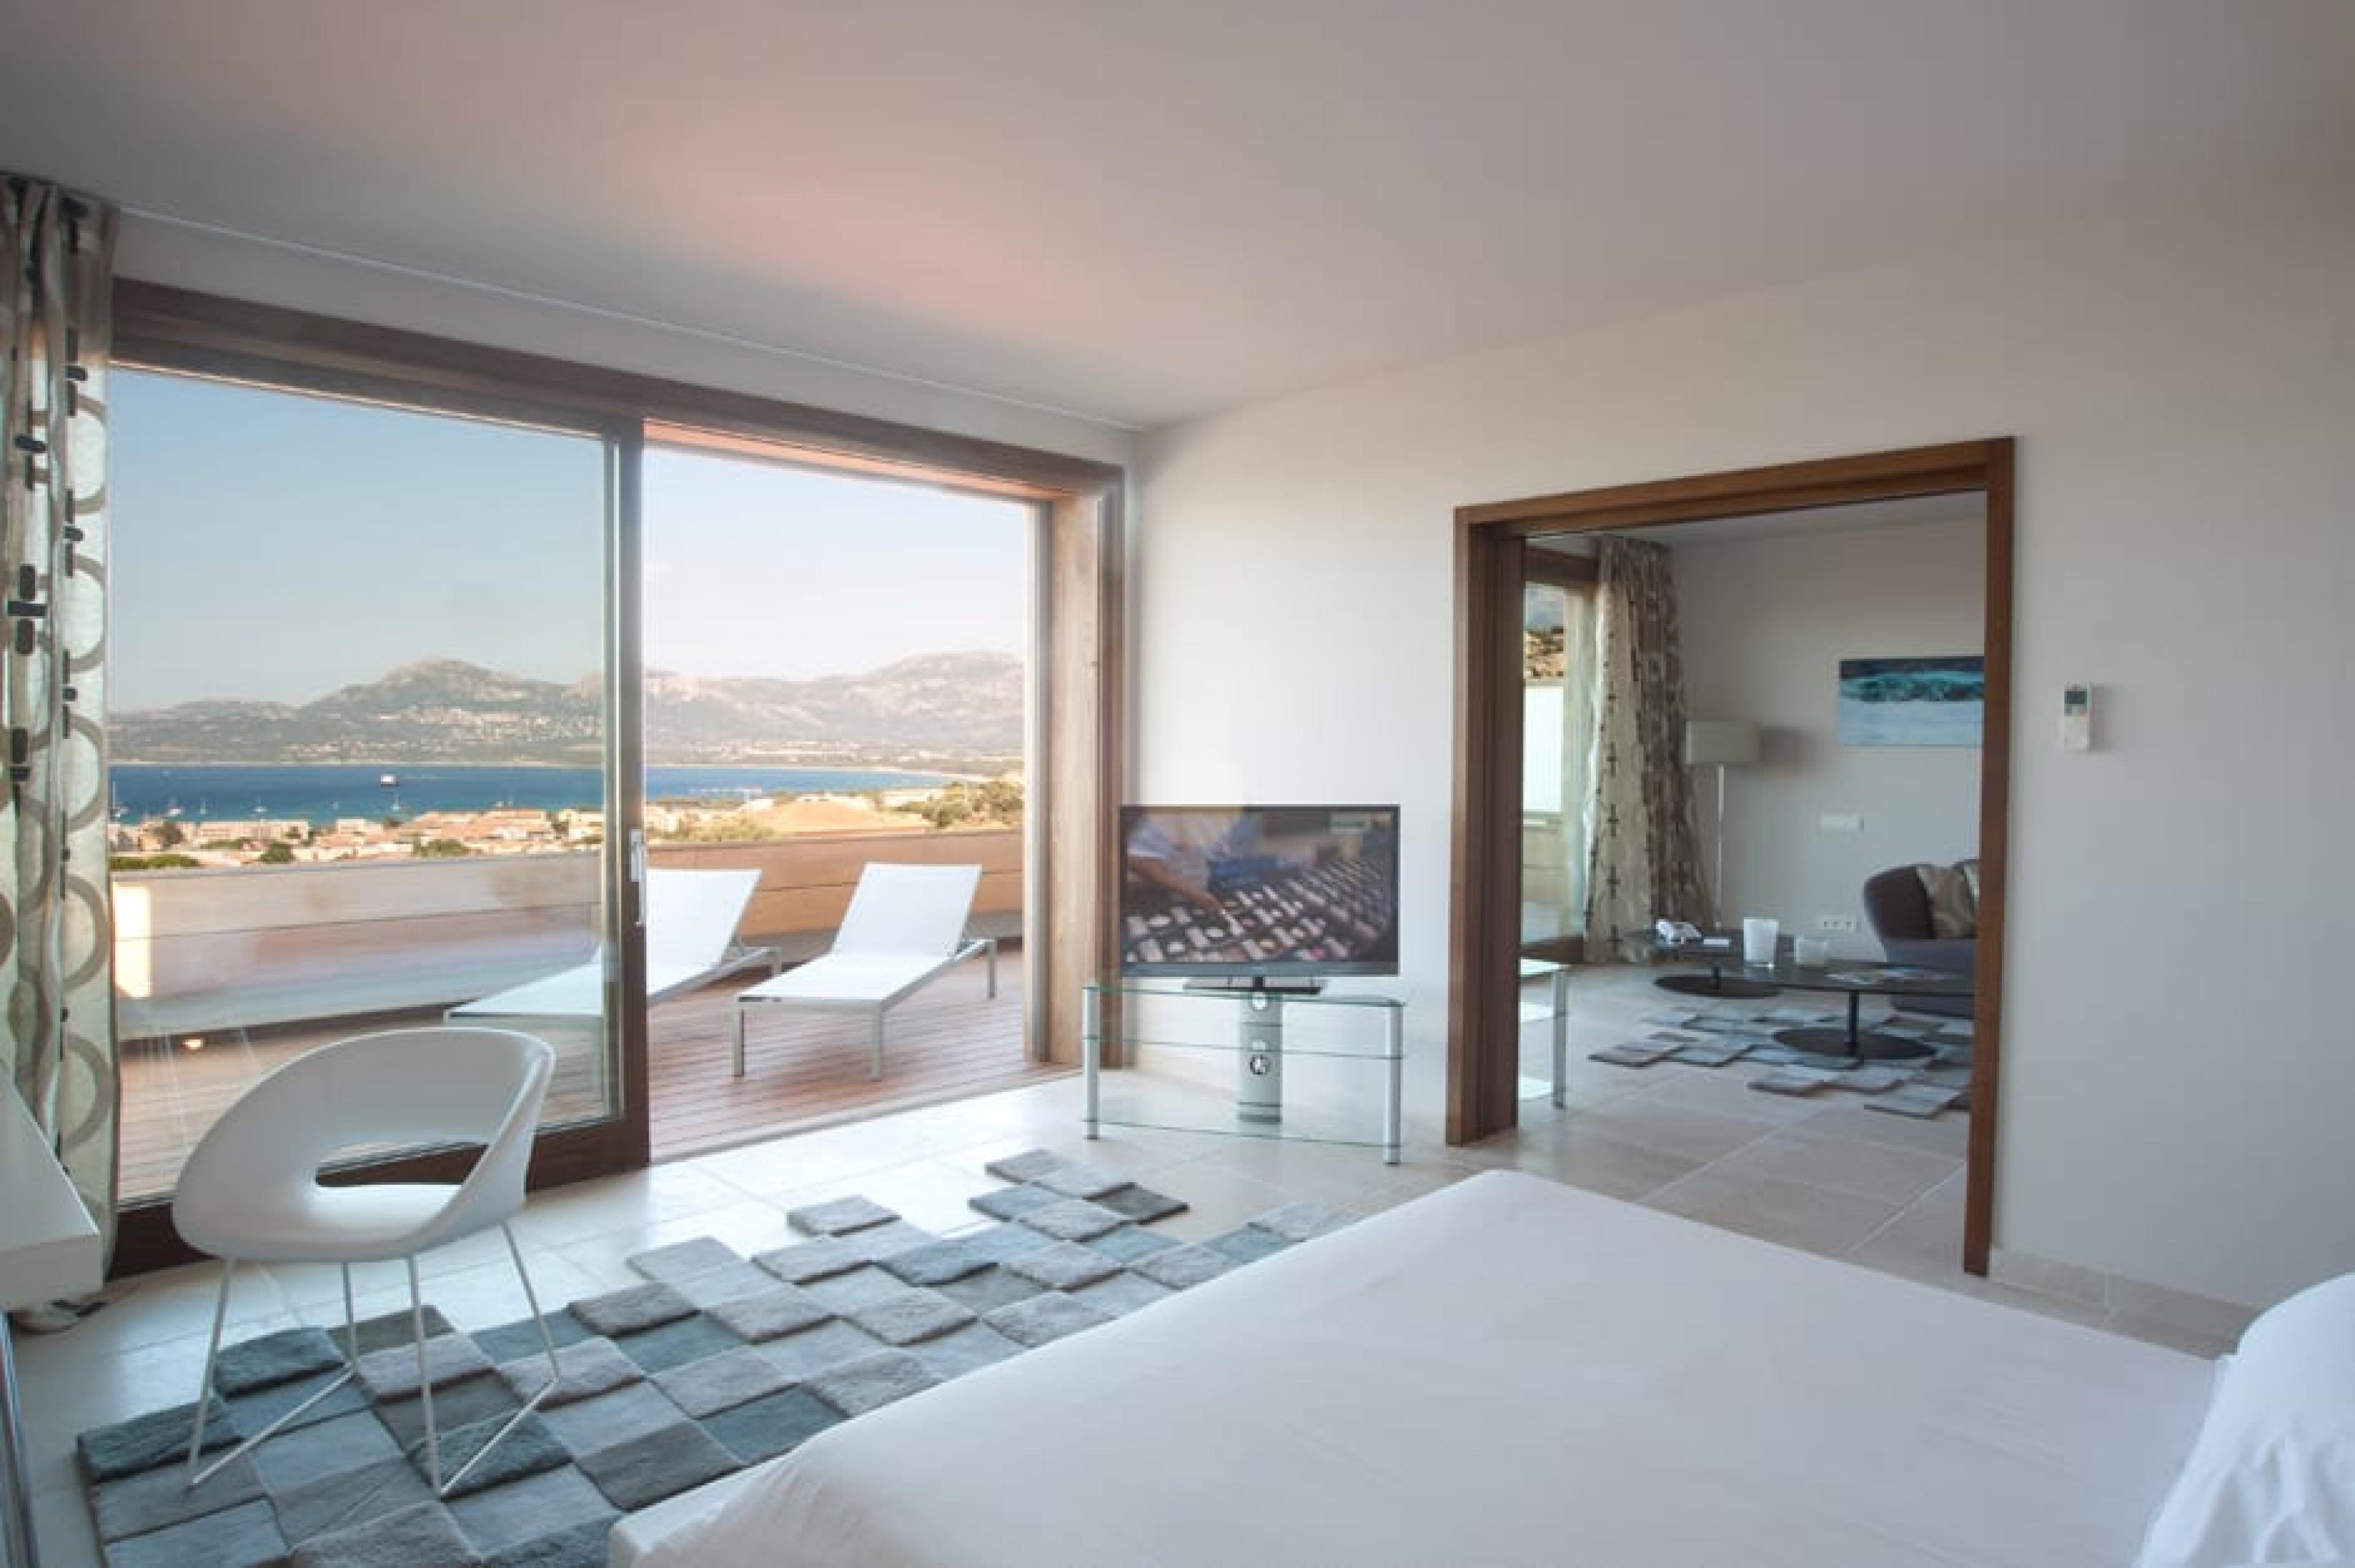 Suite at Hotel La Villa, Corsica, France